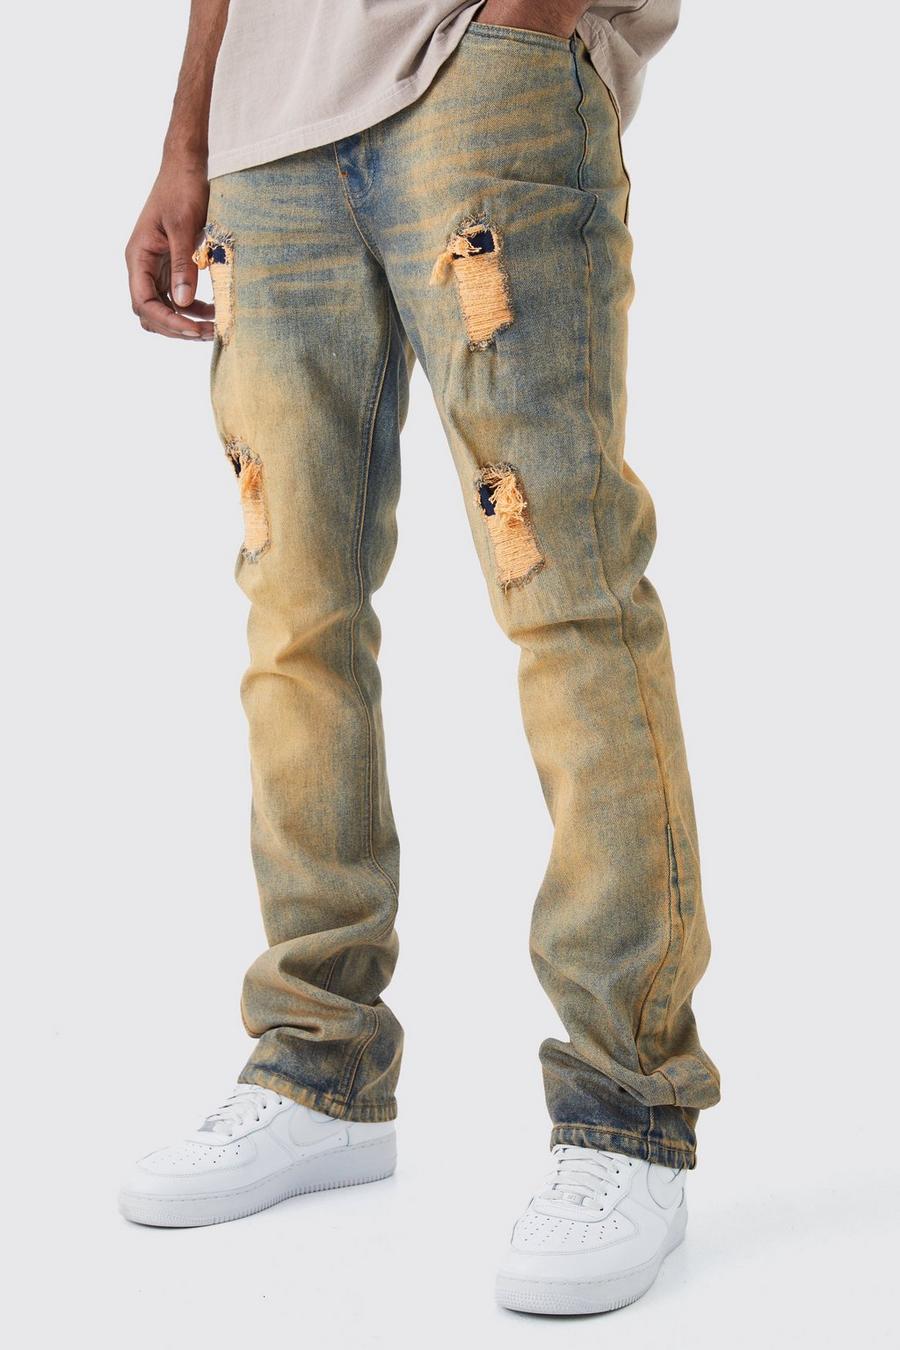 Jeans Tall Slim Fit in Stretch con strappi & rattoppi, Antique wash